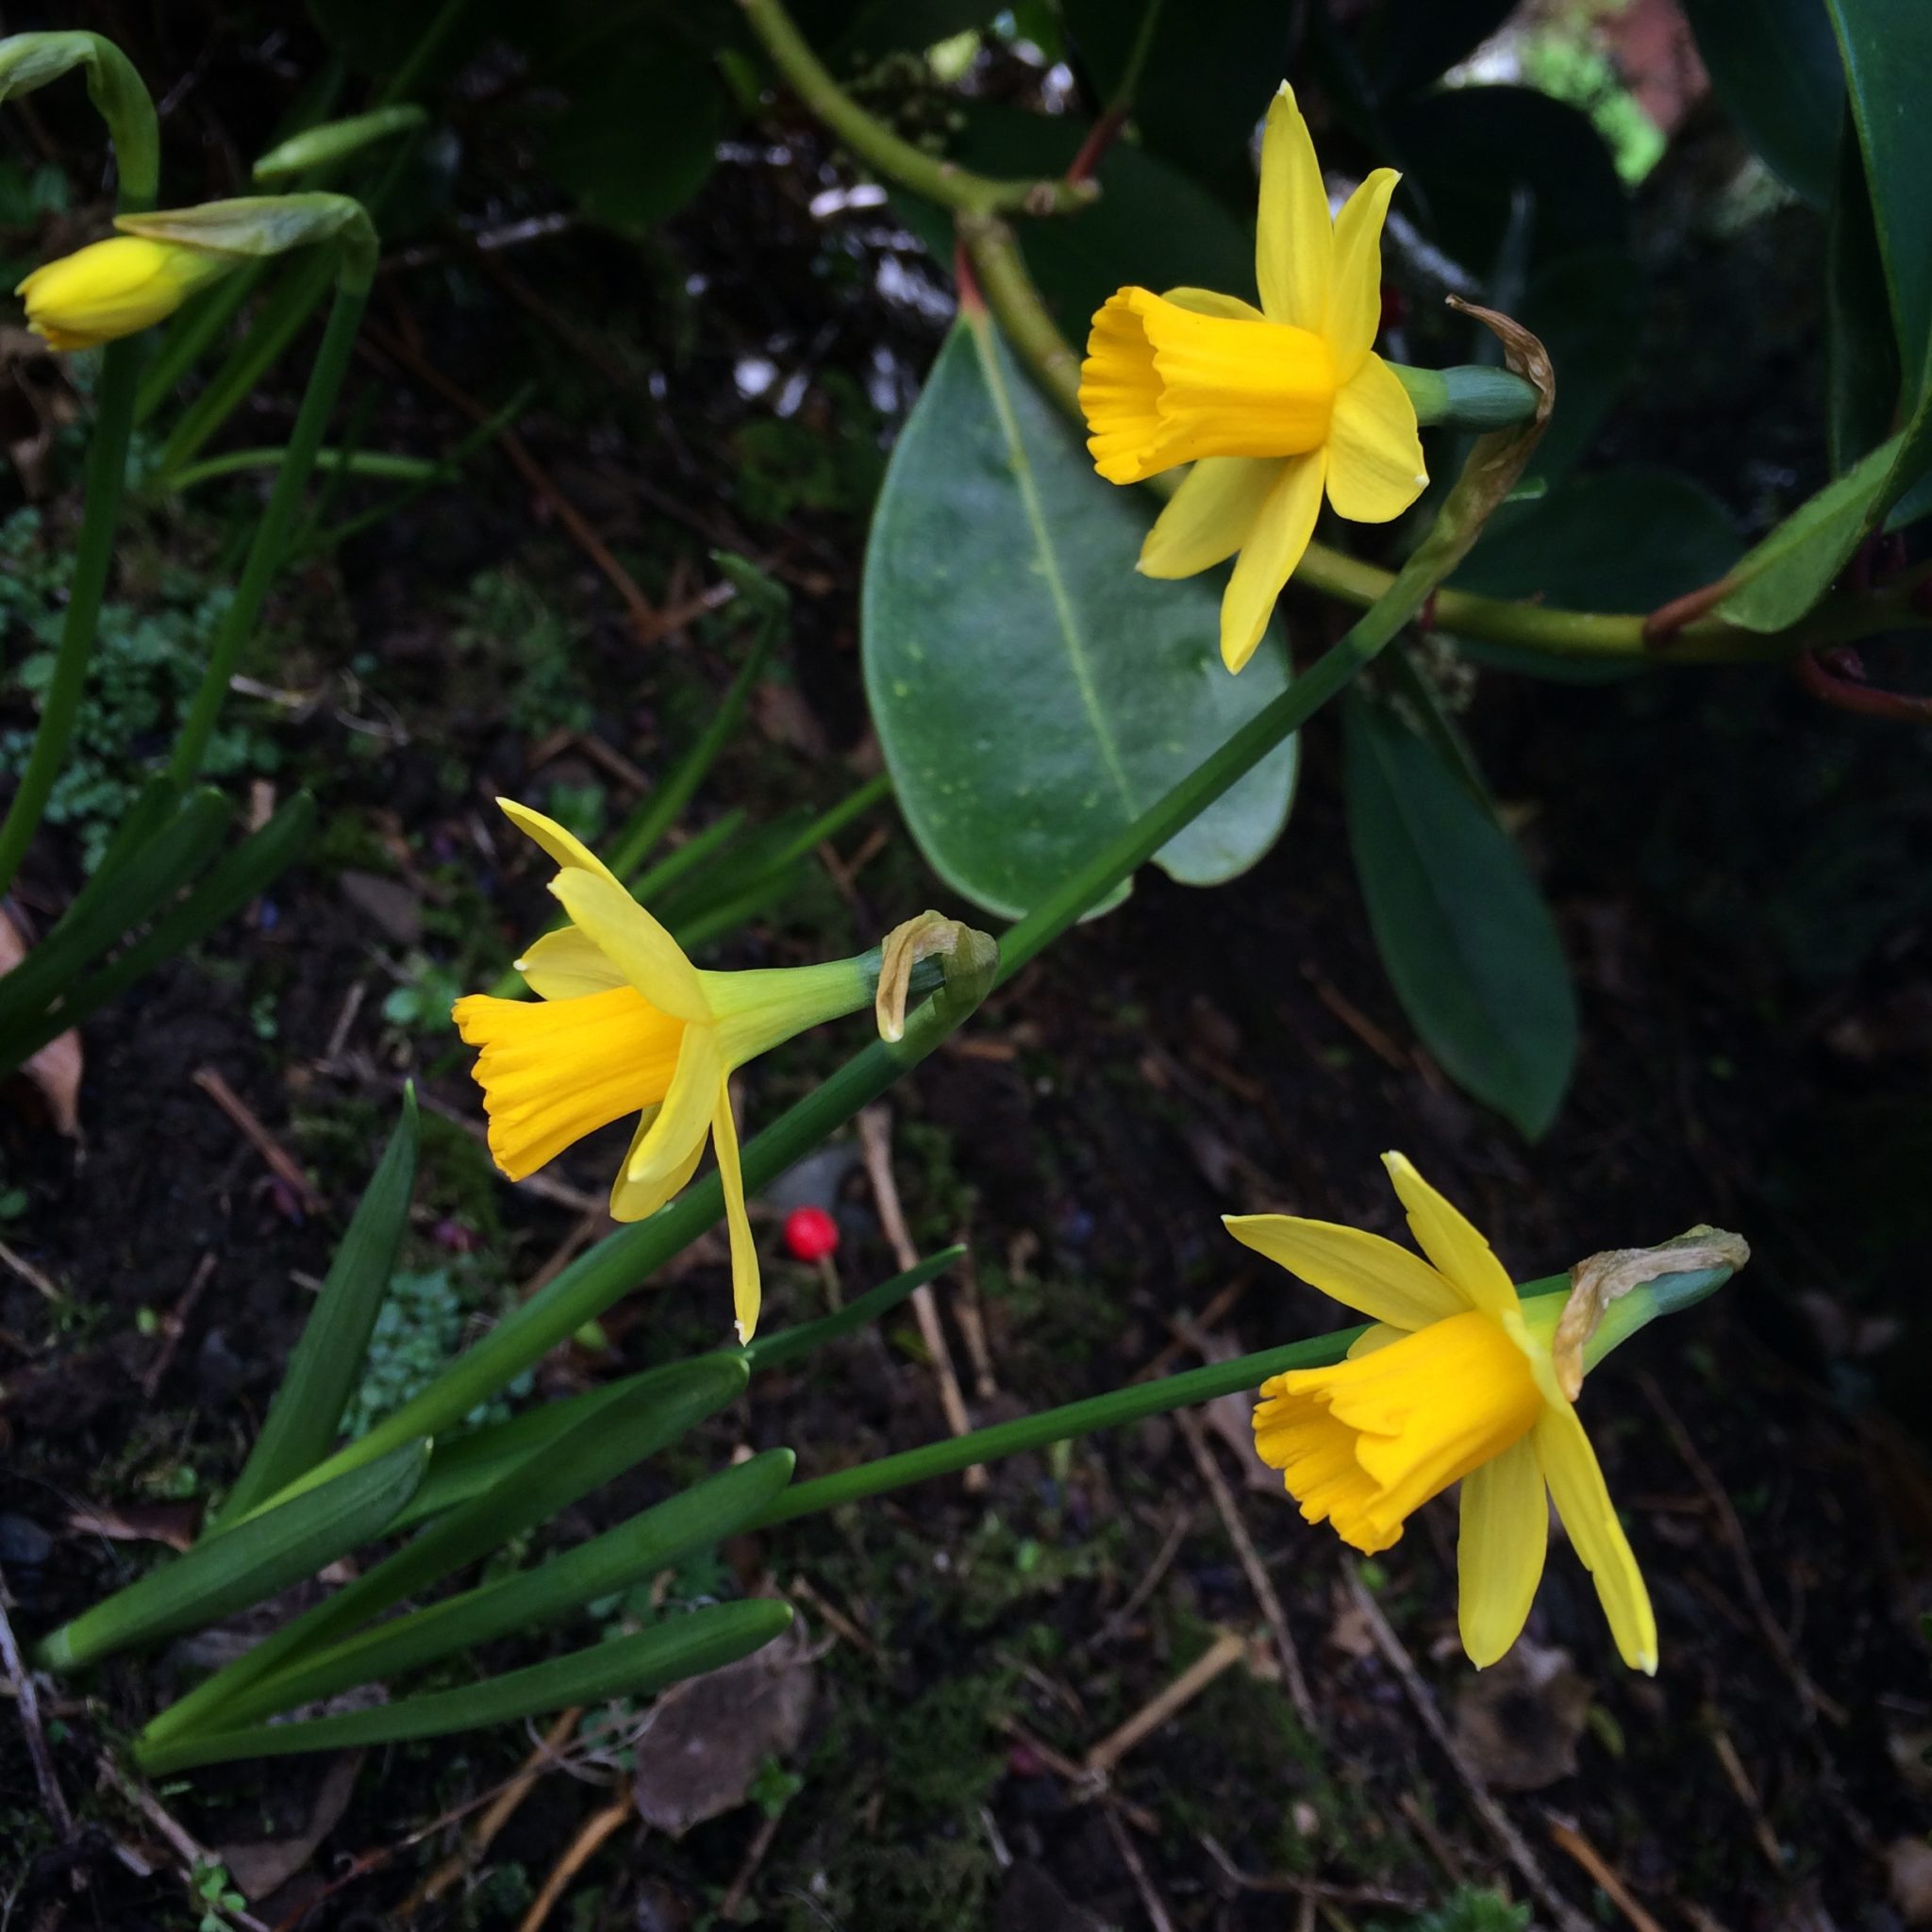 – mini daffodils –